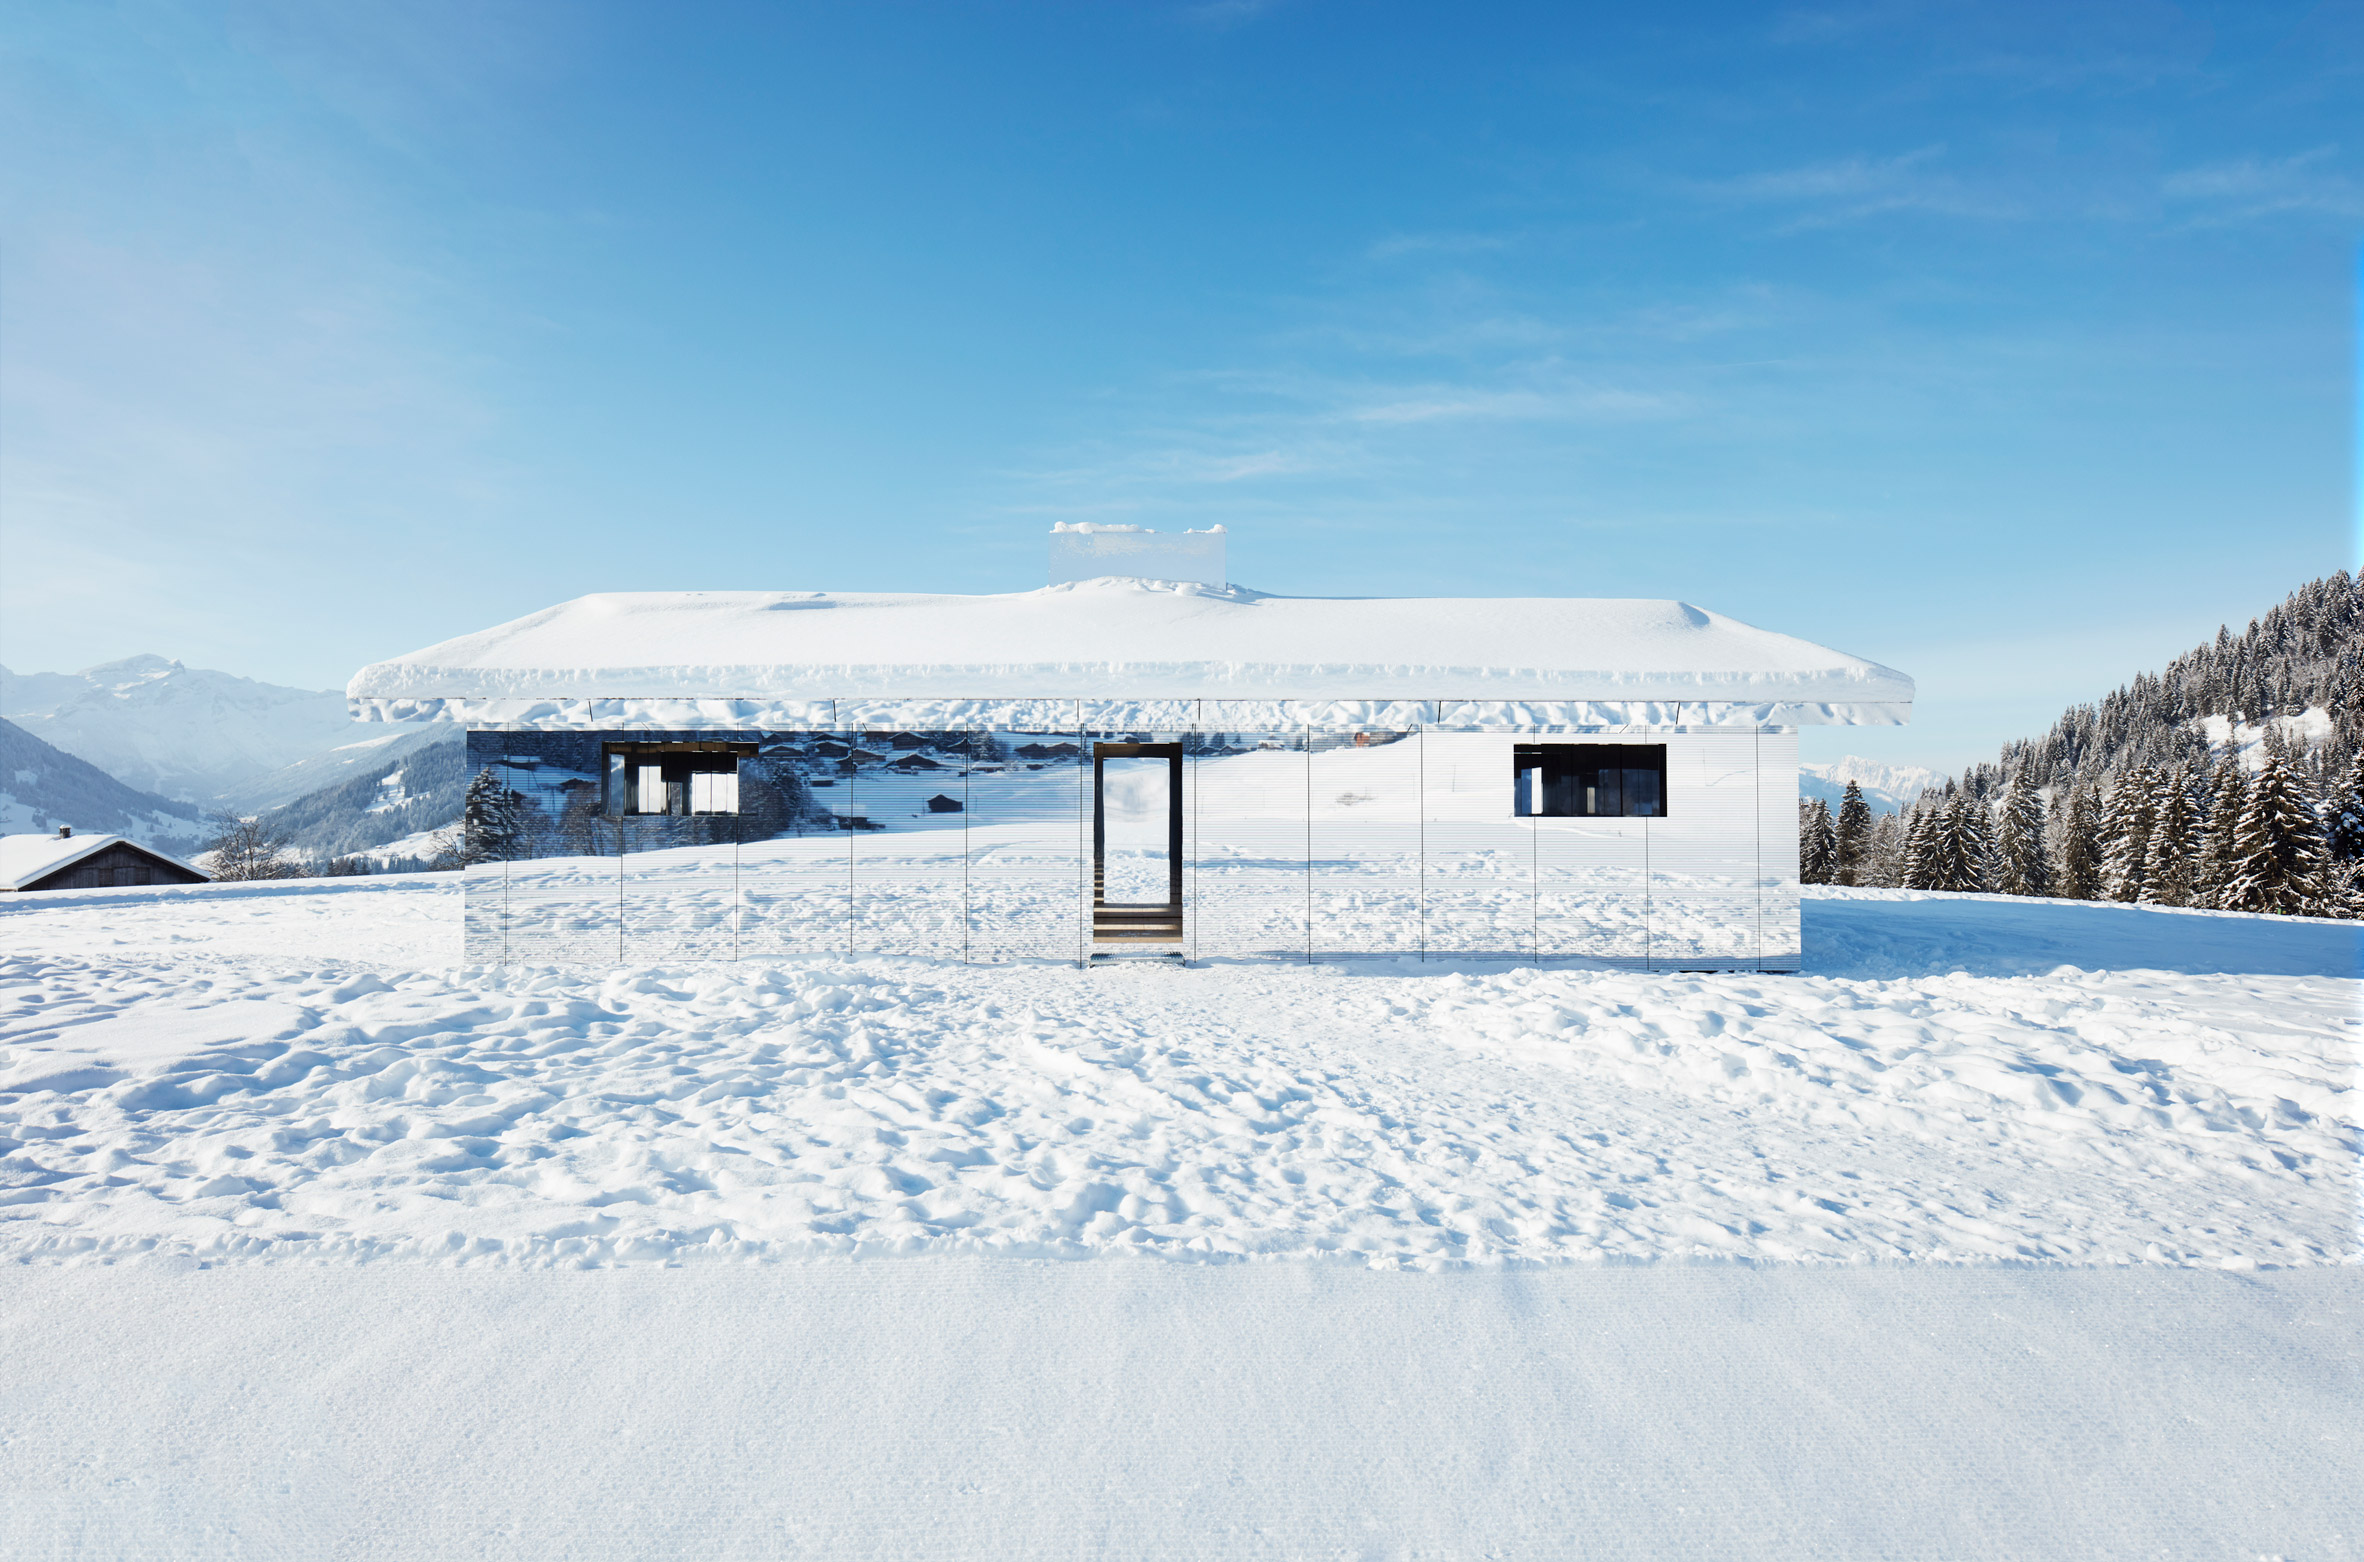 Mirage Gstaad mirrored building art installation by Doug Aitken in Switzerland in winter